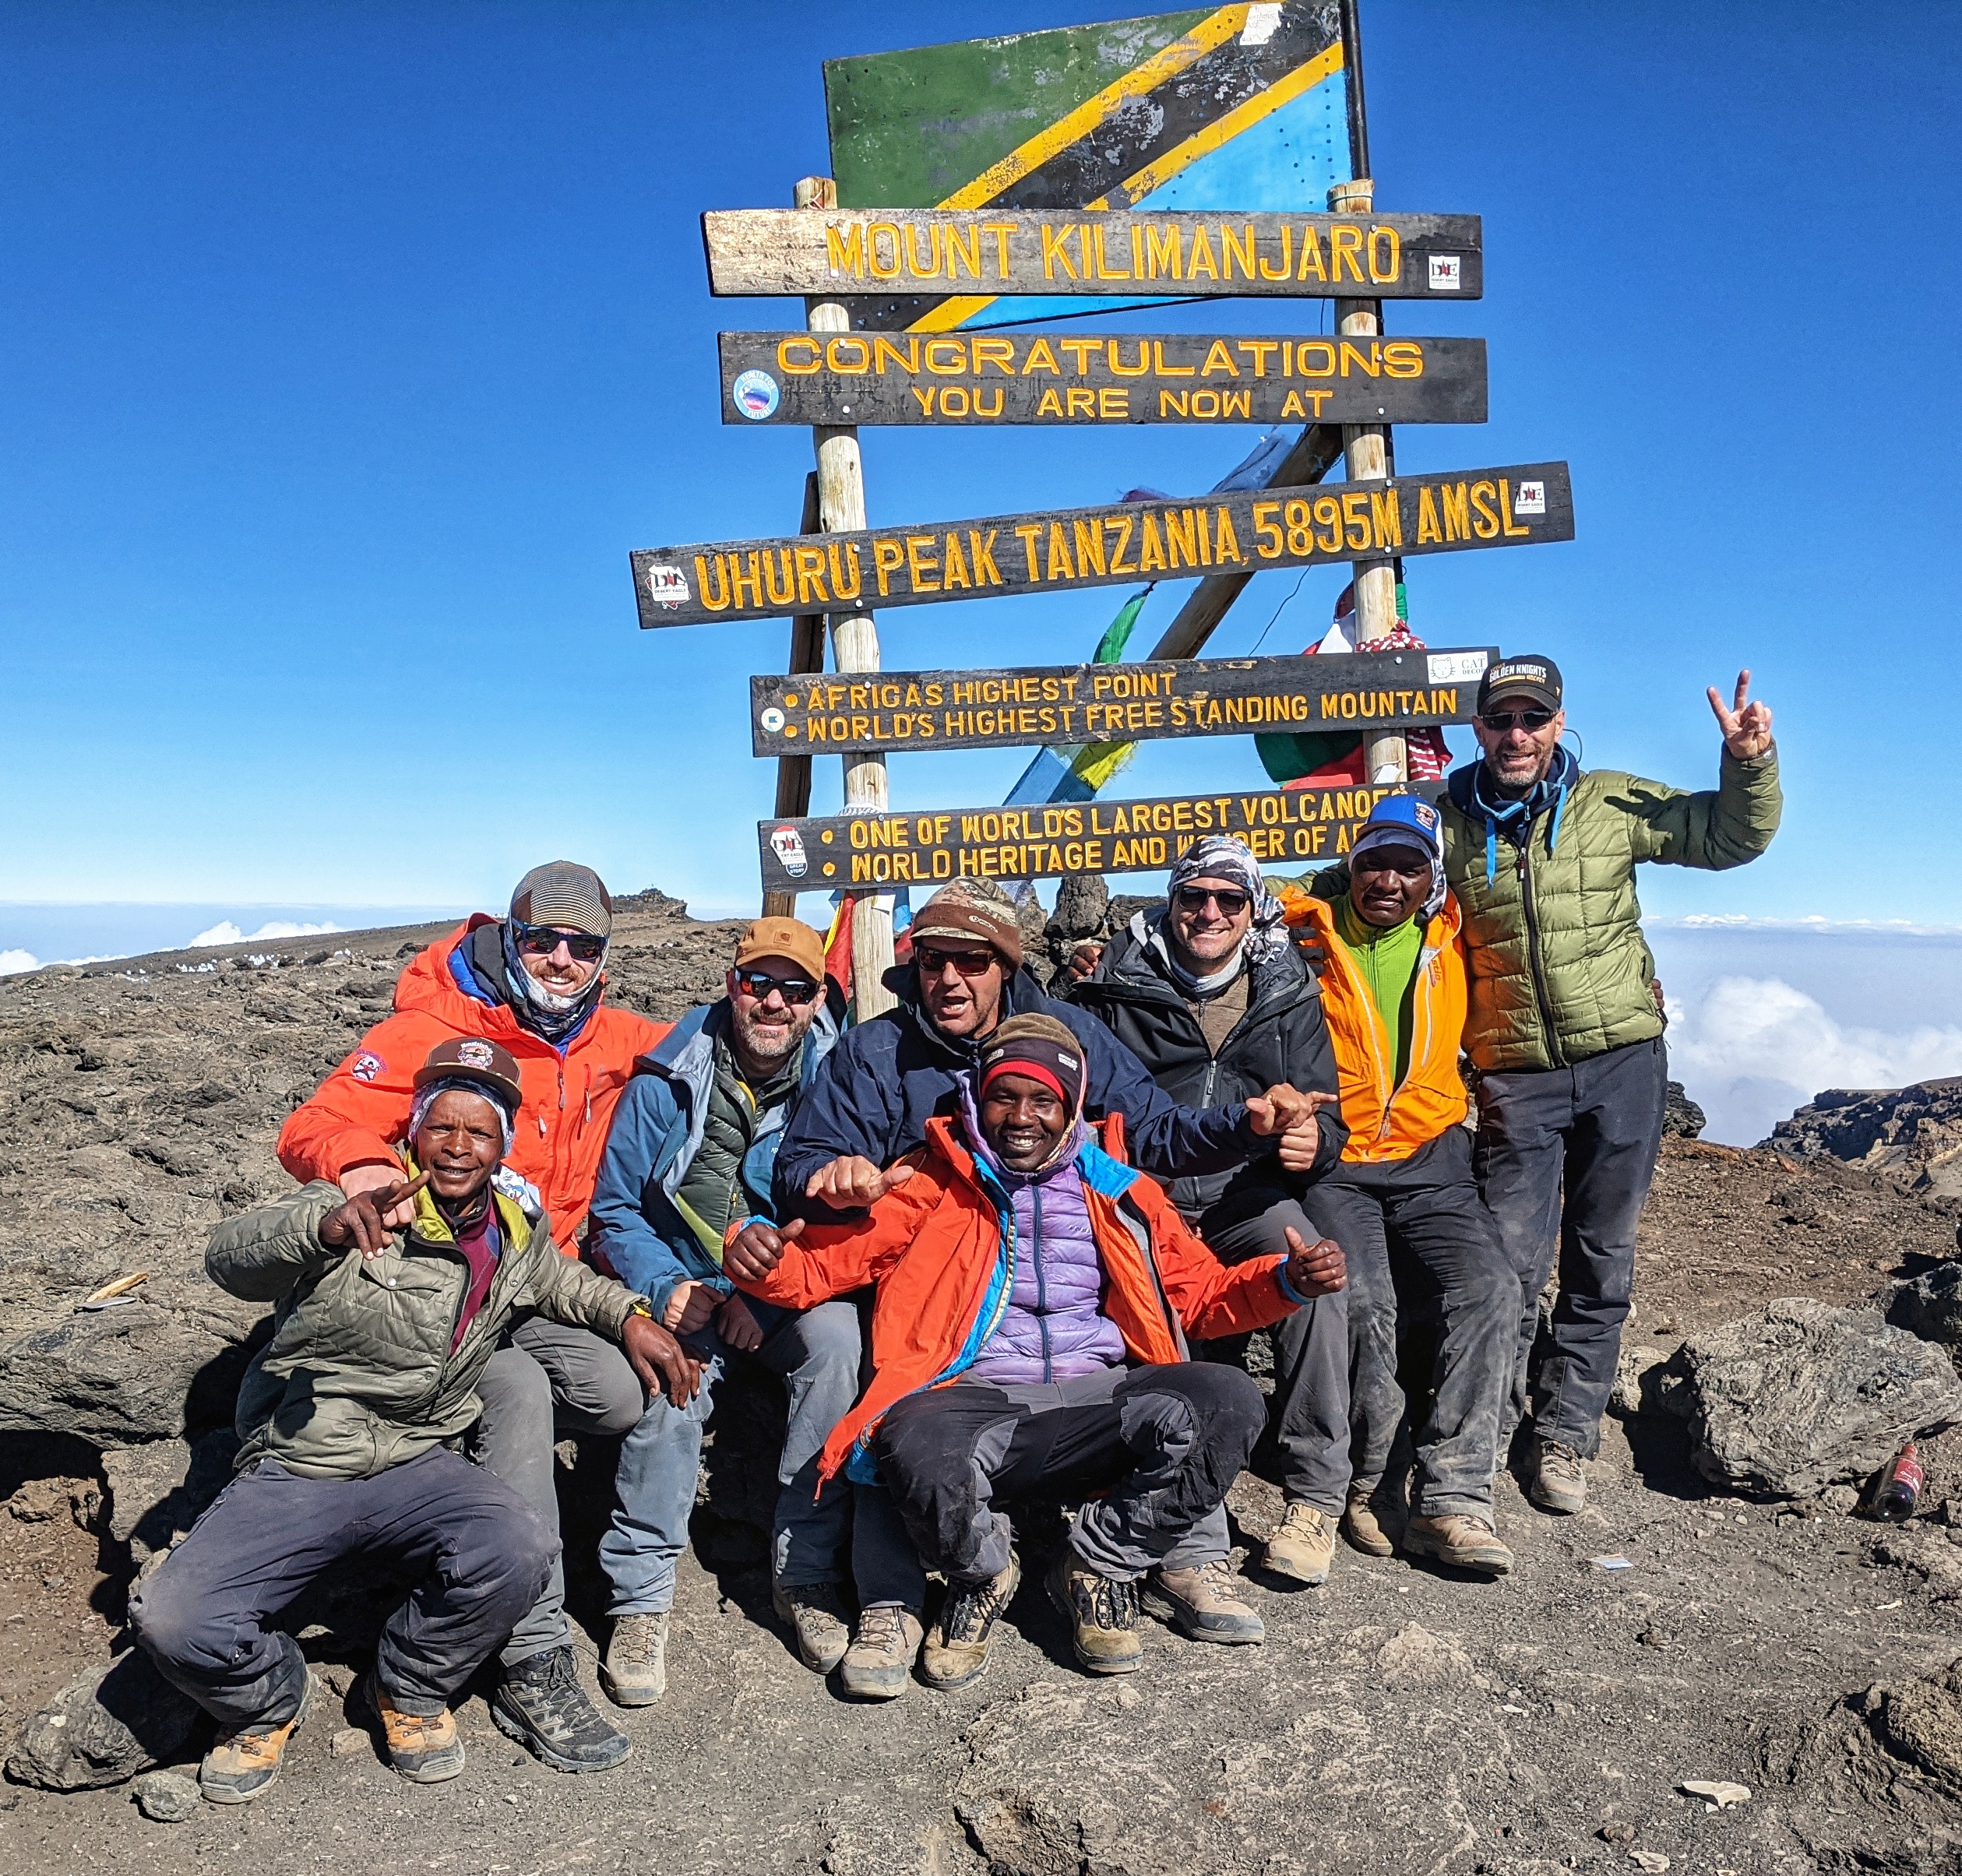 Kilimanjaro | Mountain Trip Guide Service